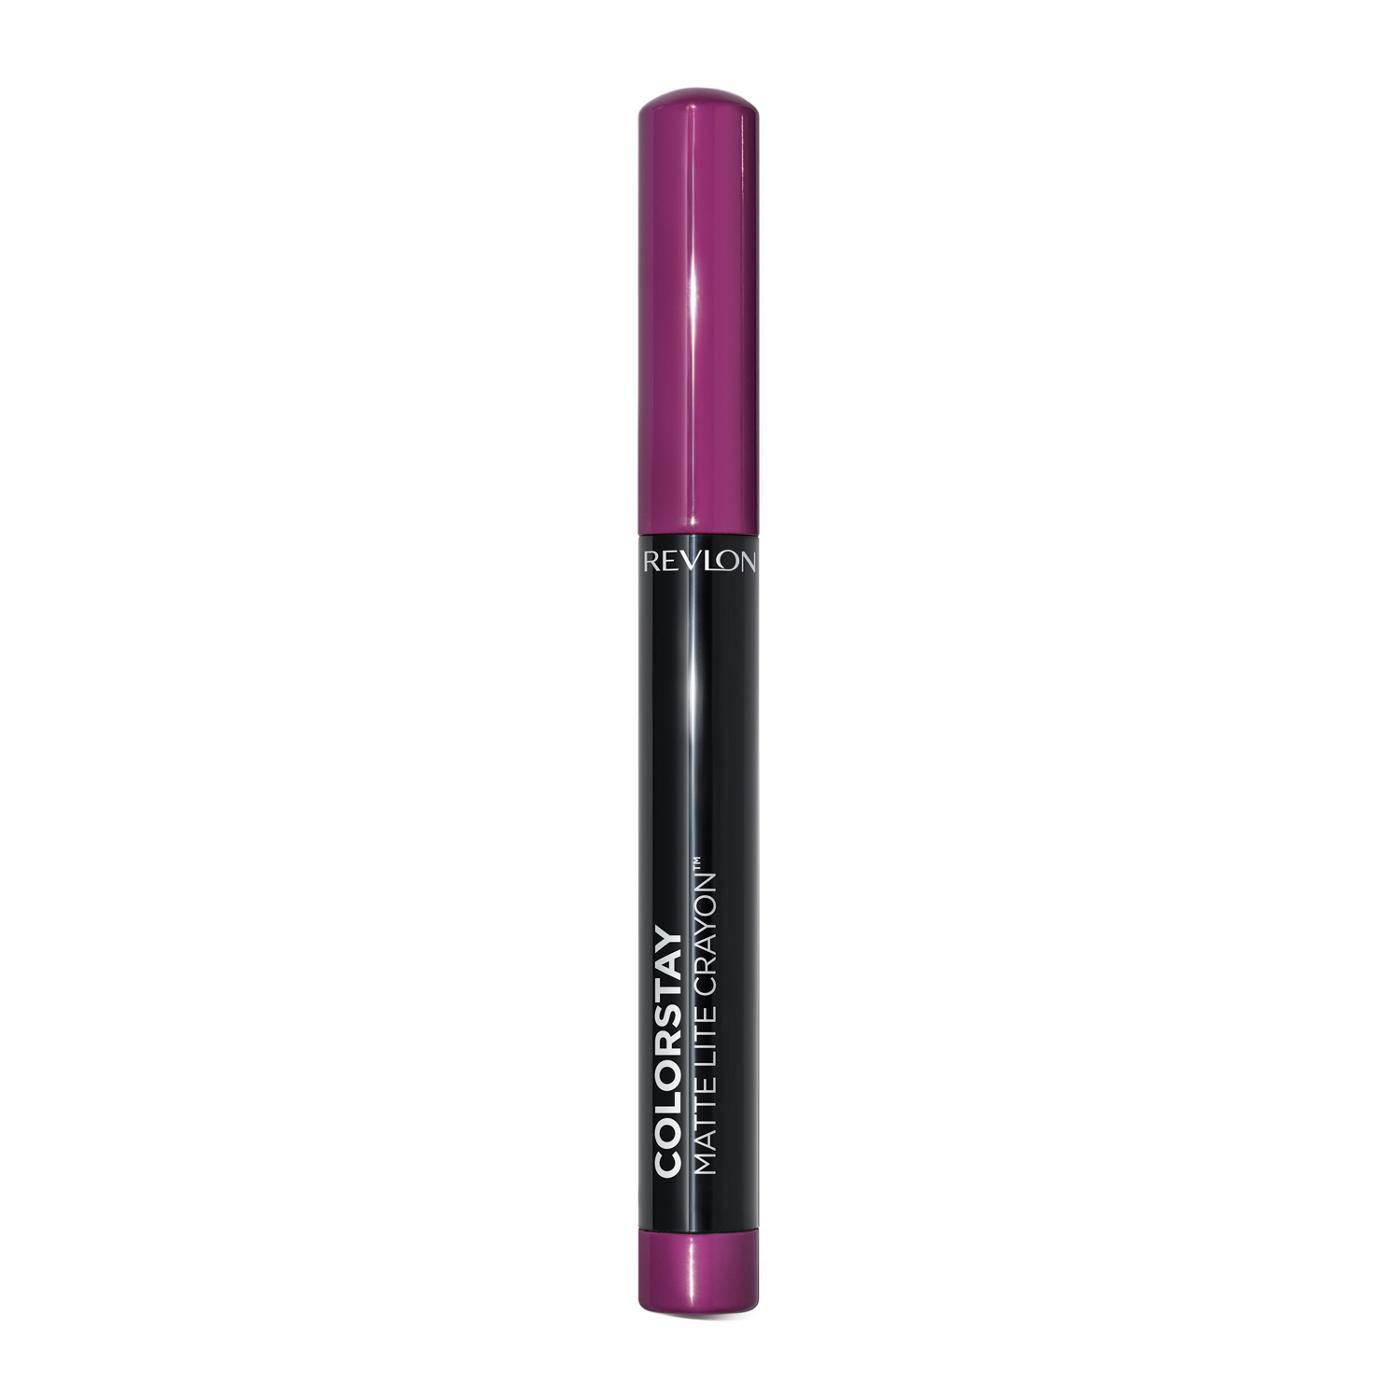 Revlon ColorStay Matte Lite Crayon Lipstick - Sky High; image 1 of 7